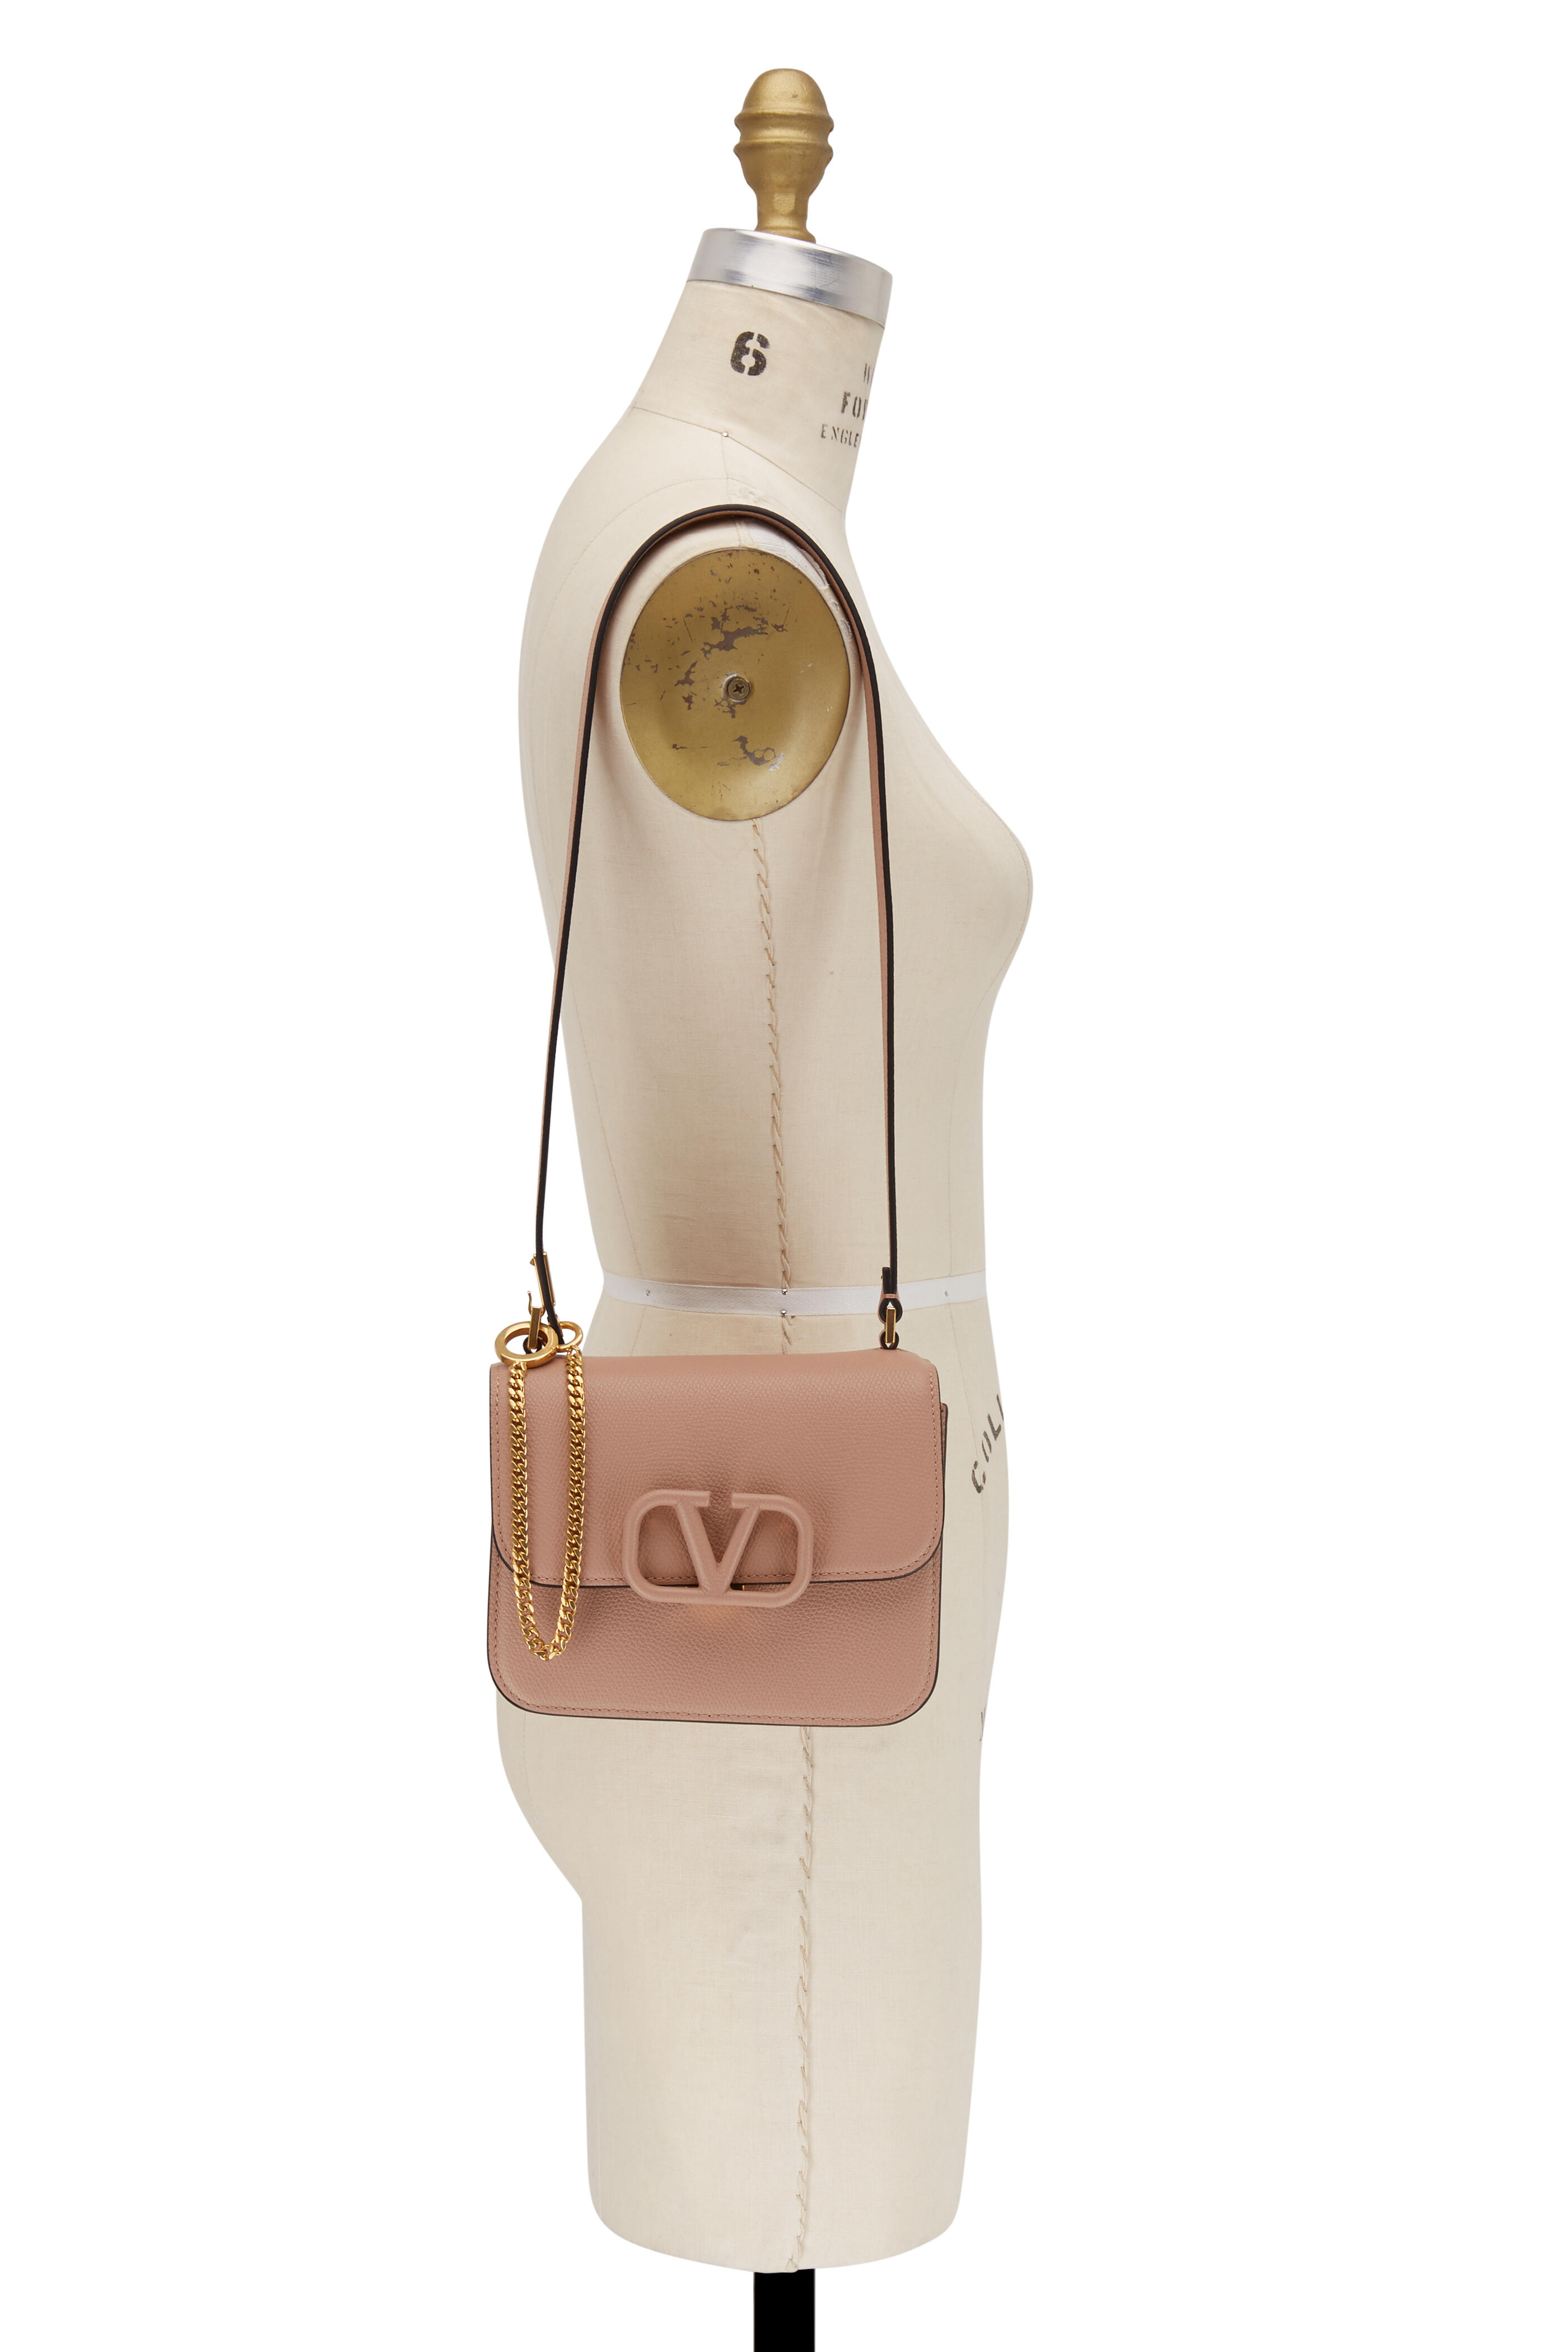 Valentino Pink Small Rockstud Crossbody Bag Leather Pony-style